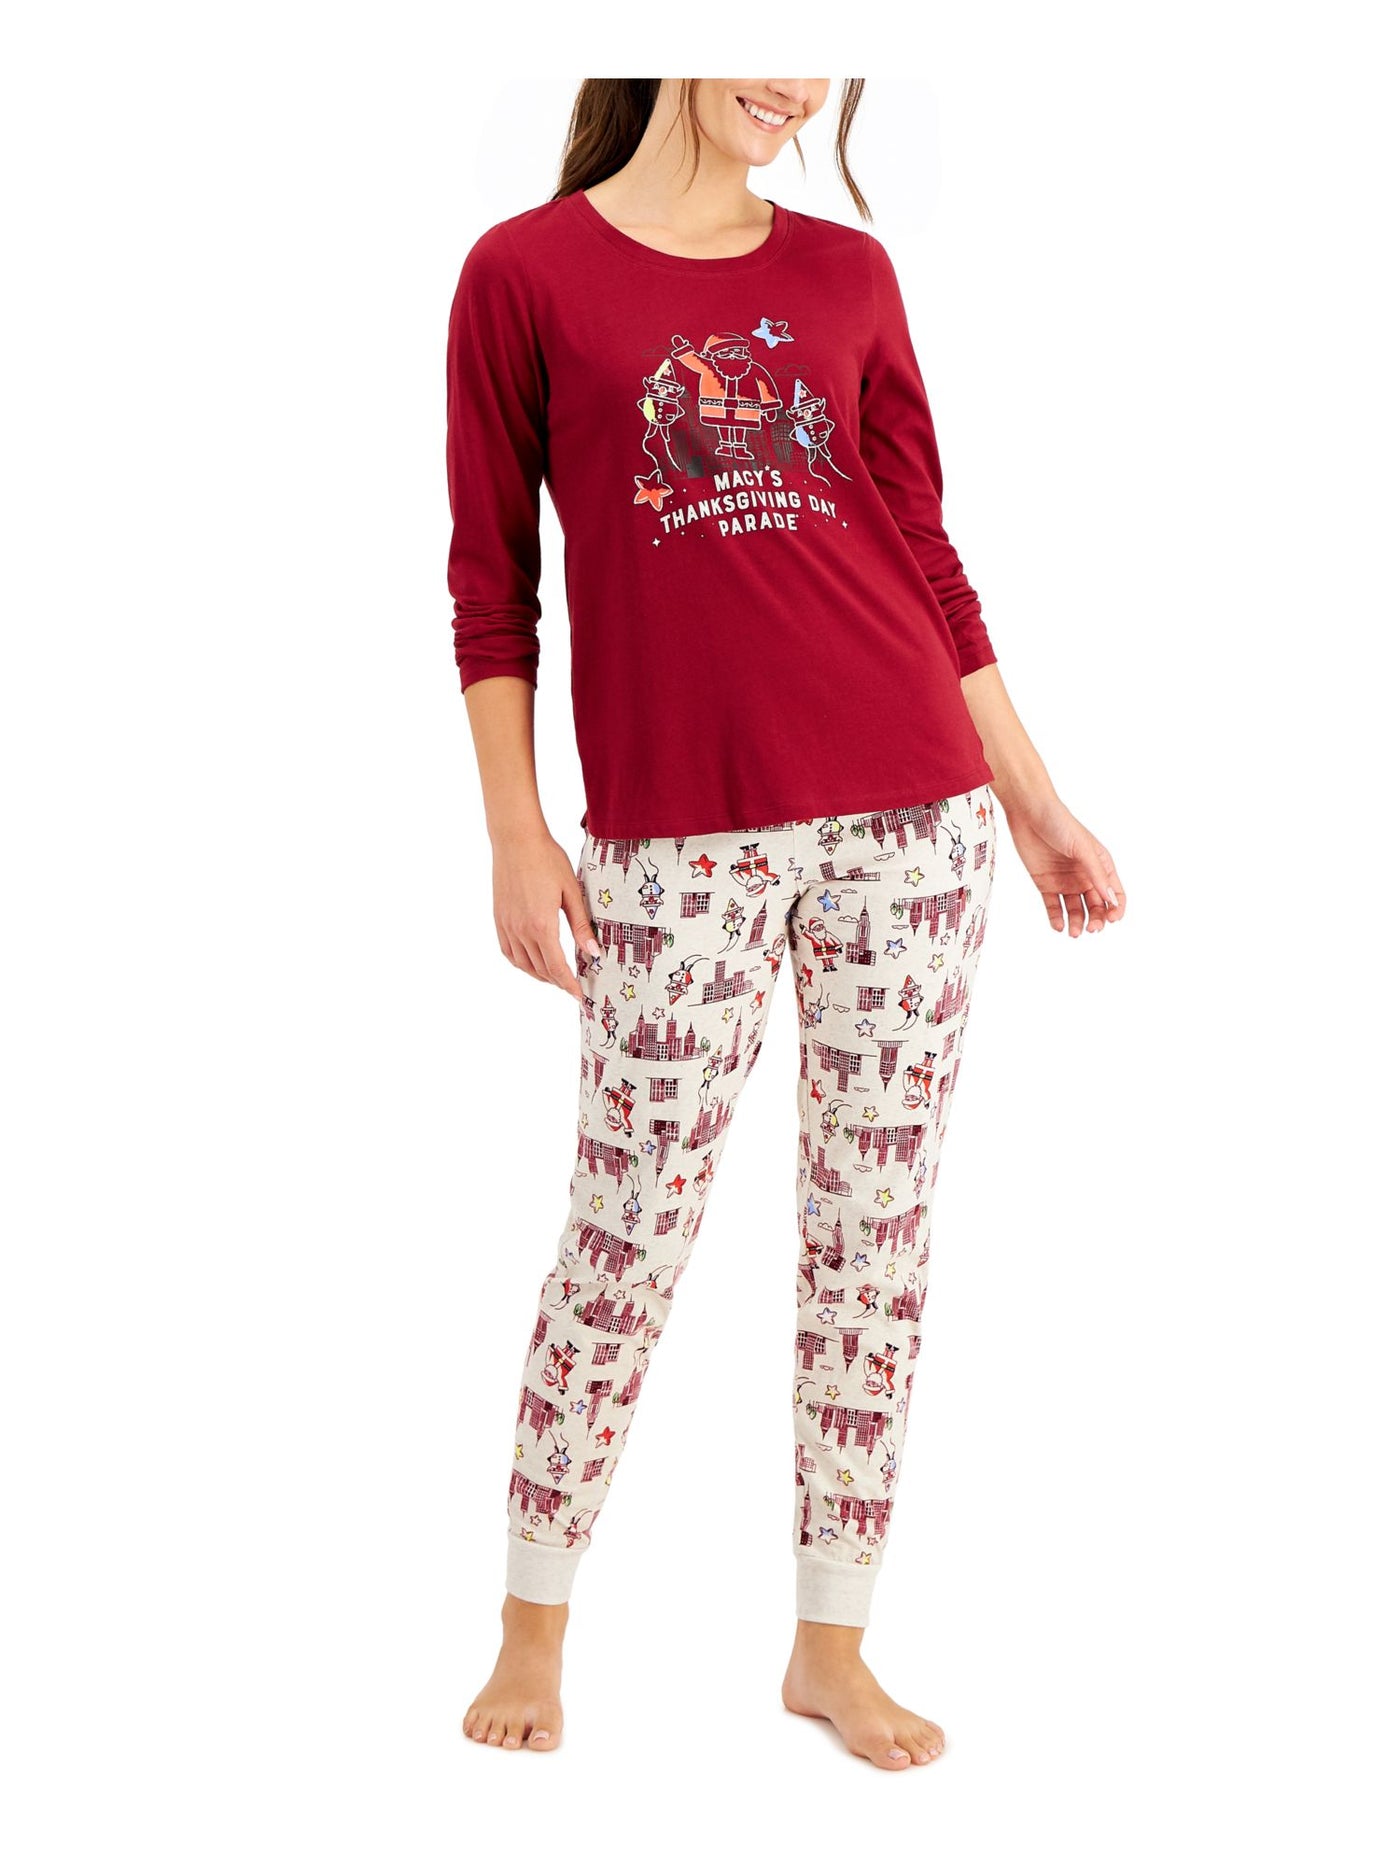 FAMILY PJs Womens Burgundy Graphic Top Elastic Band Long Sleeve Lounge Pants Pajamas L